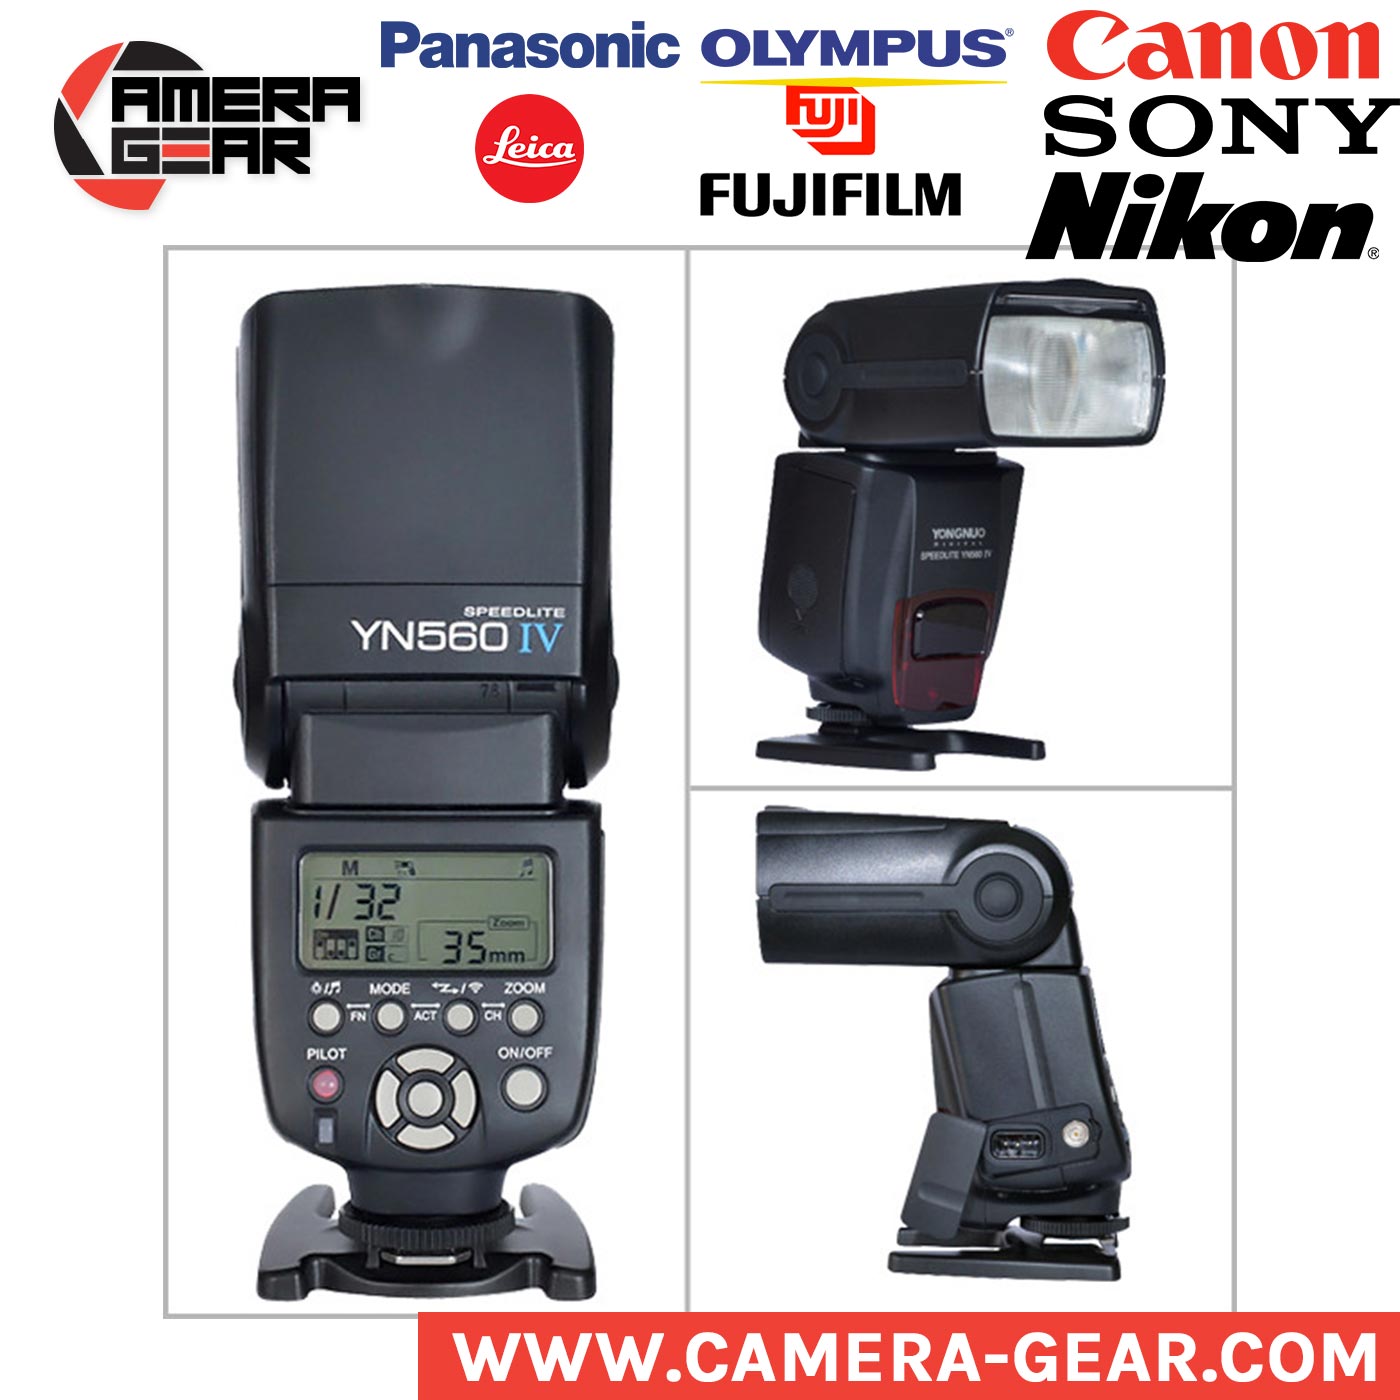 Planta Kilómetros Conejo Yongnuo YN560 IV - Flash speedlite for Canon and Nikon - Camera Gear